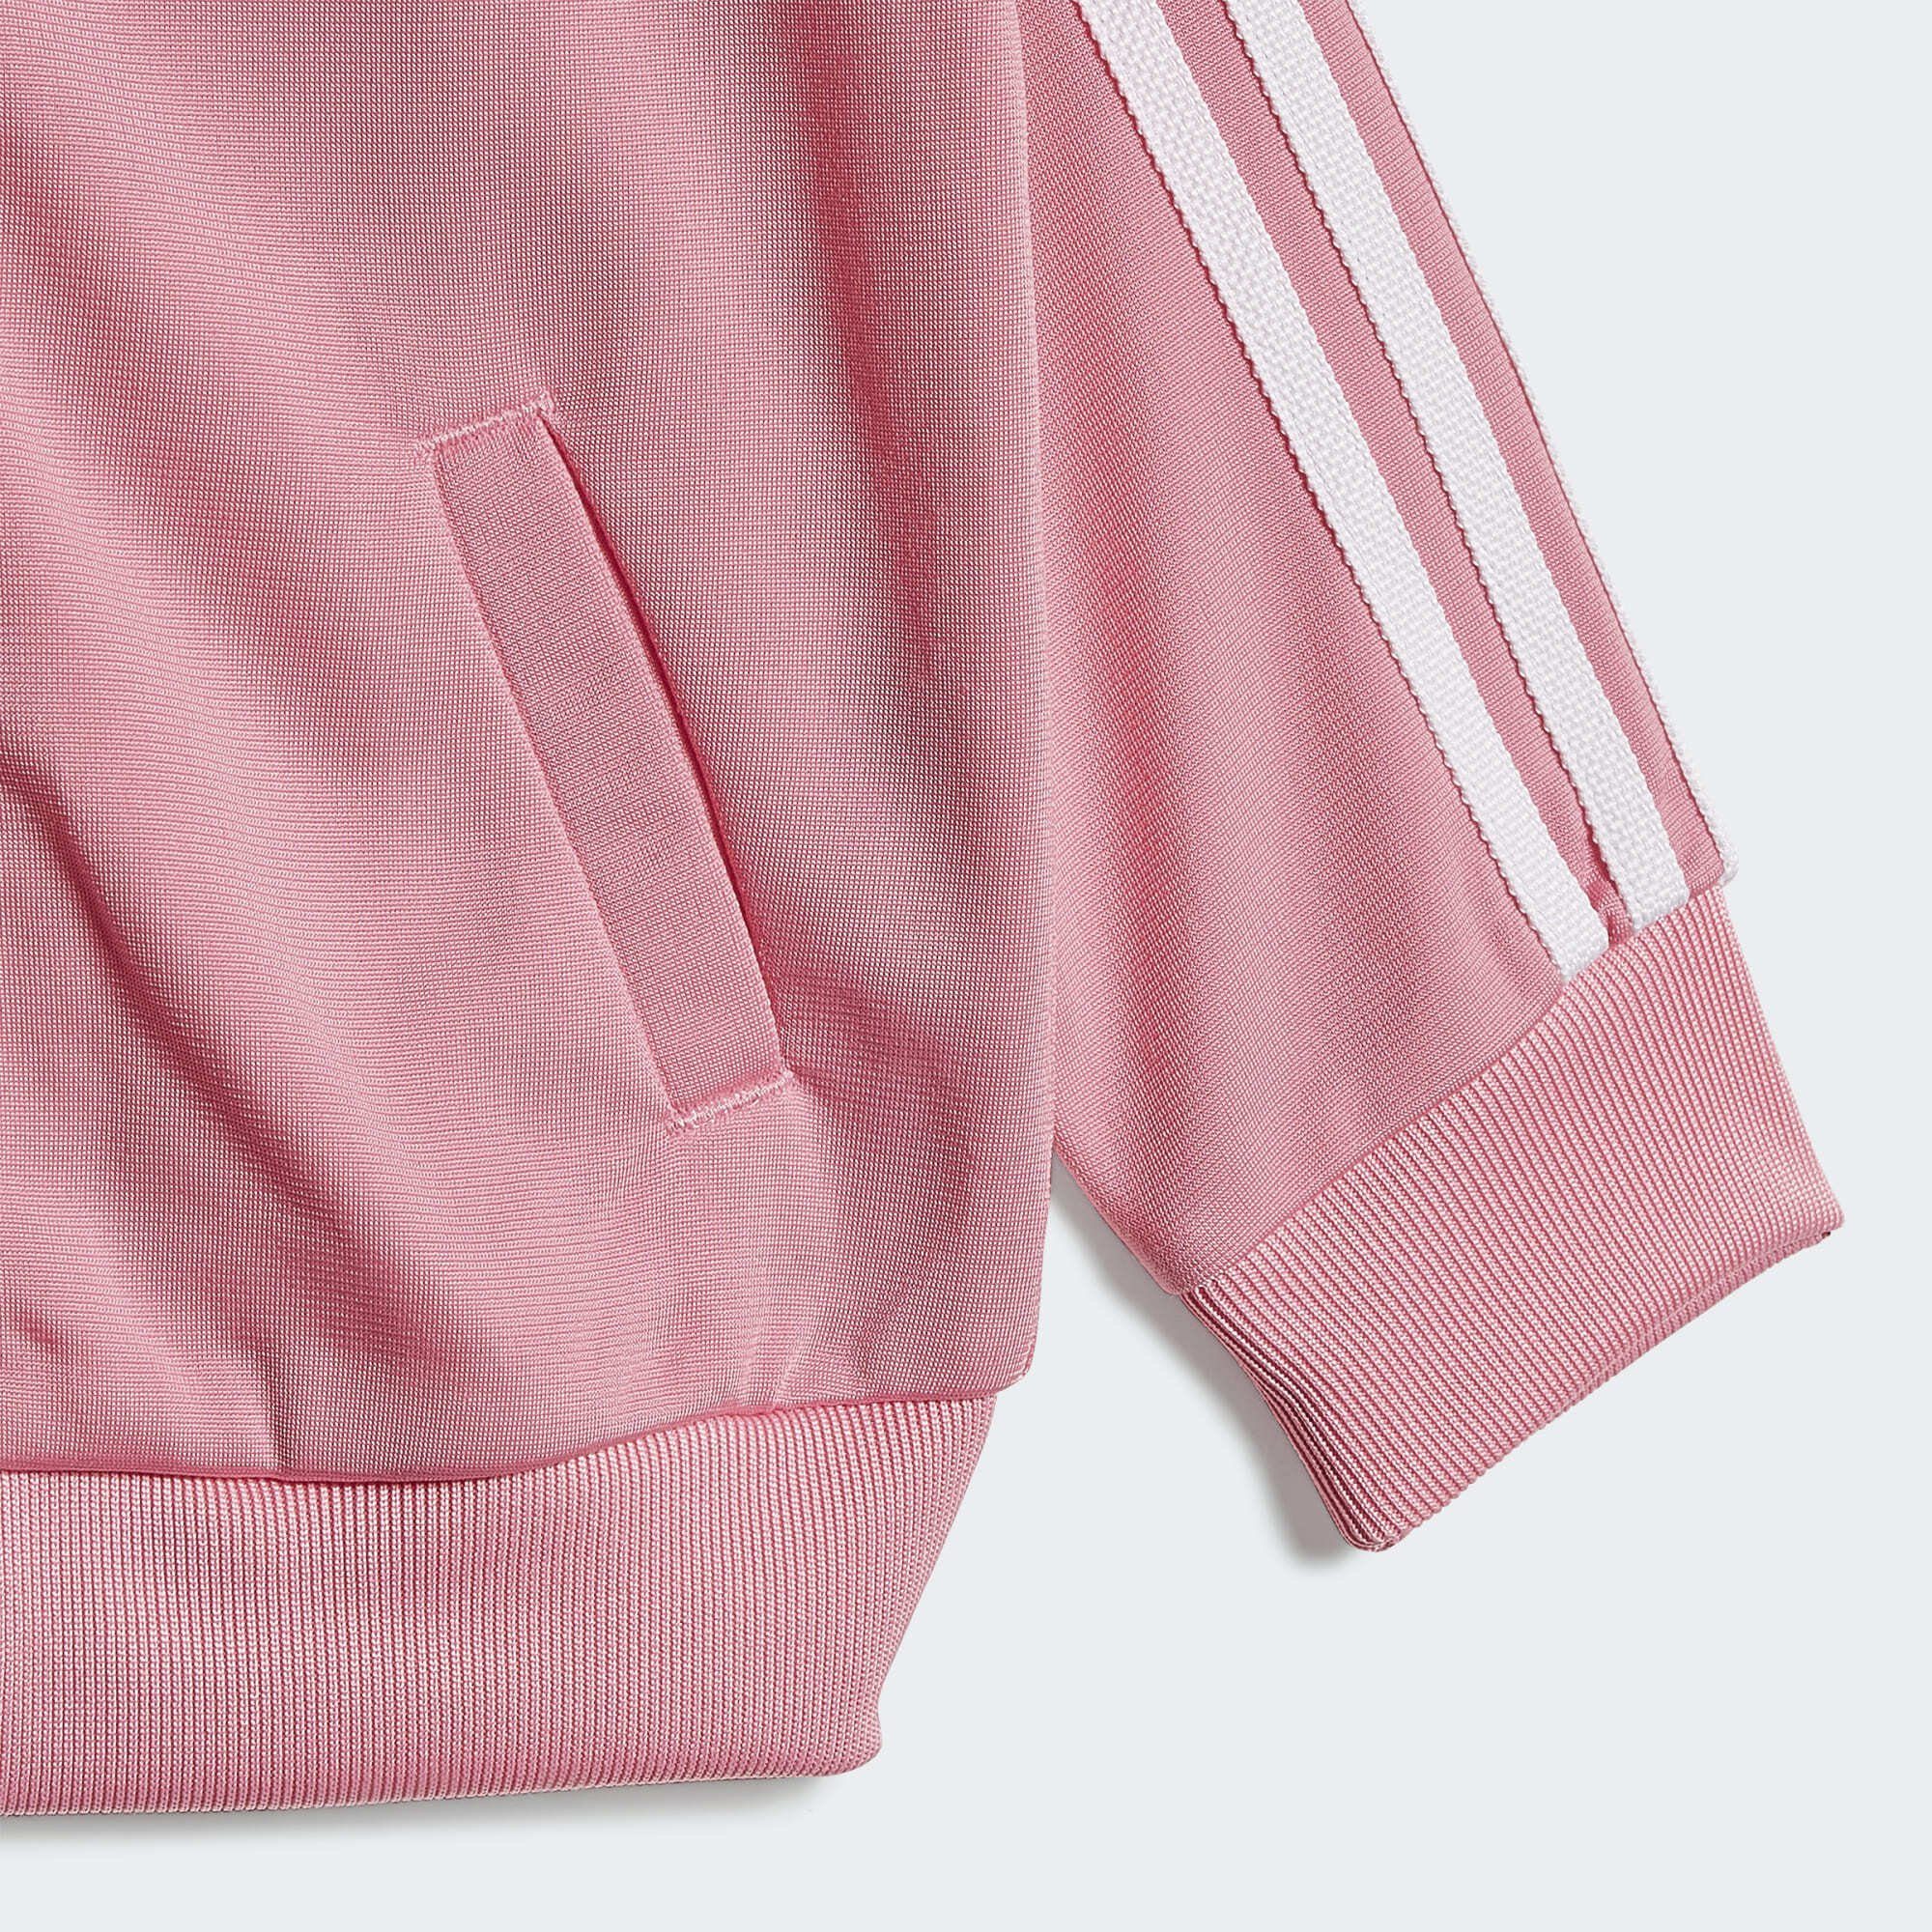 ADICOLOR Originals adidas Bliss Pink TRAININGSANZUG Sportanzug SST